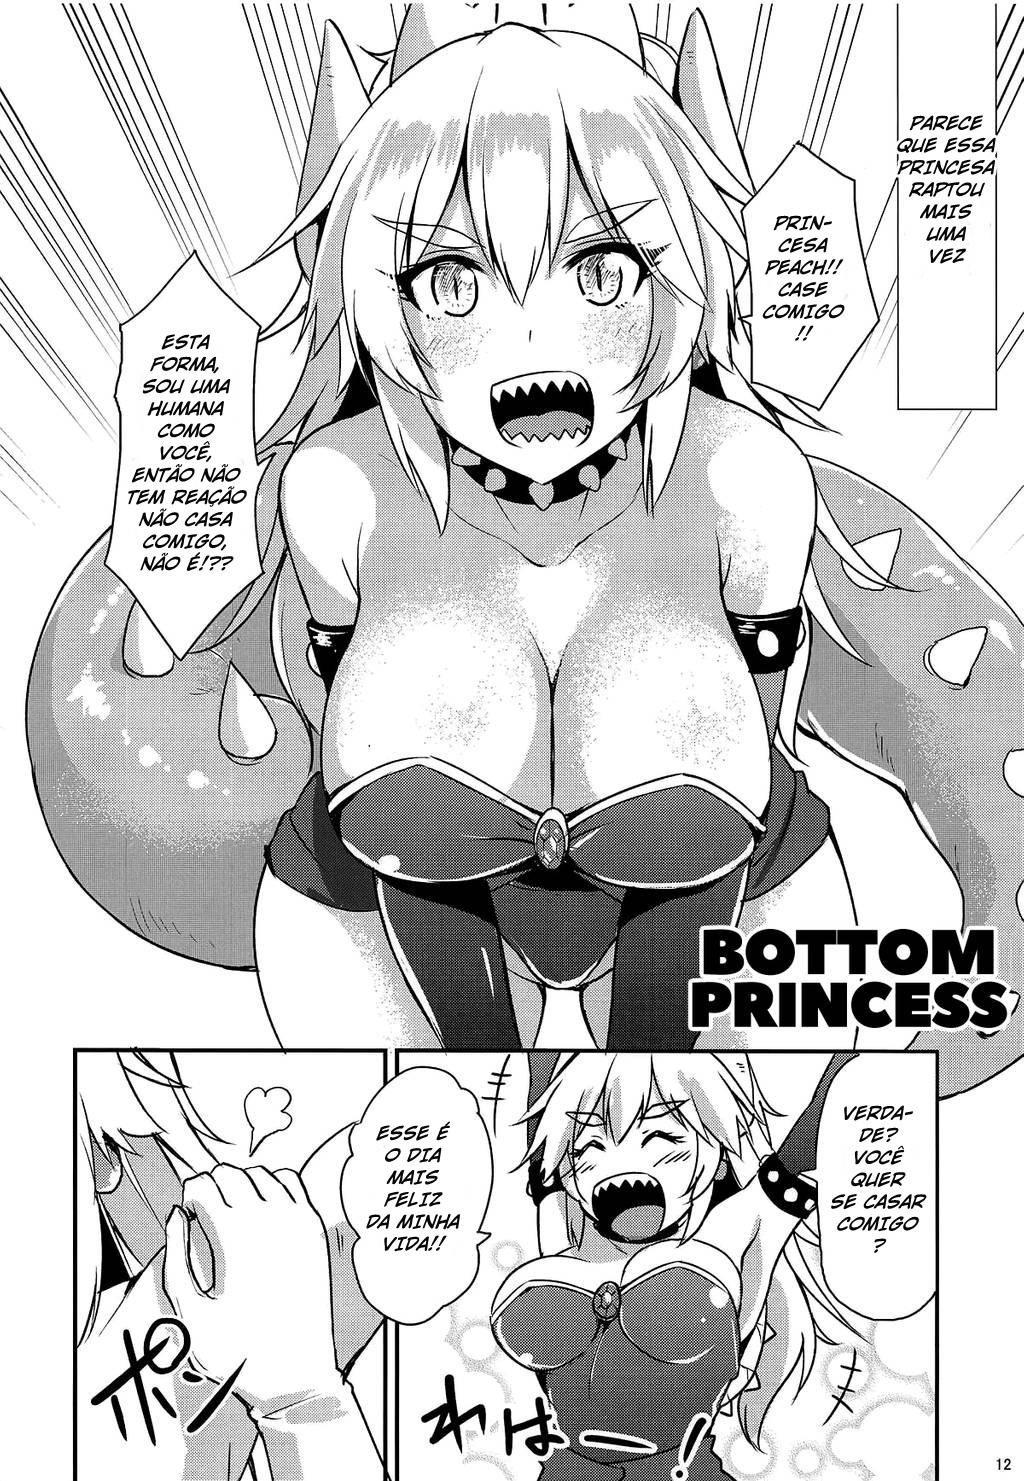 Princesa puta hentai pornô (11)